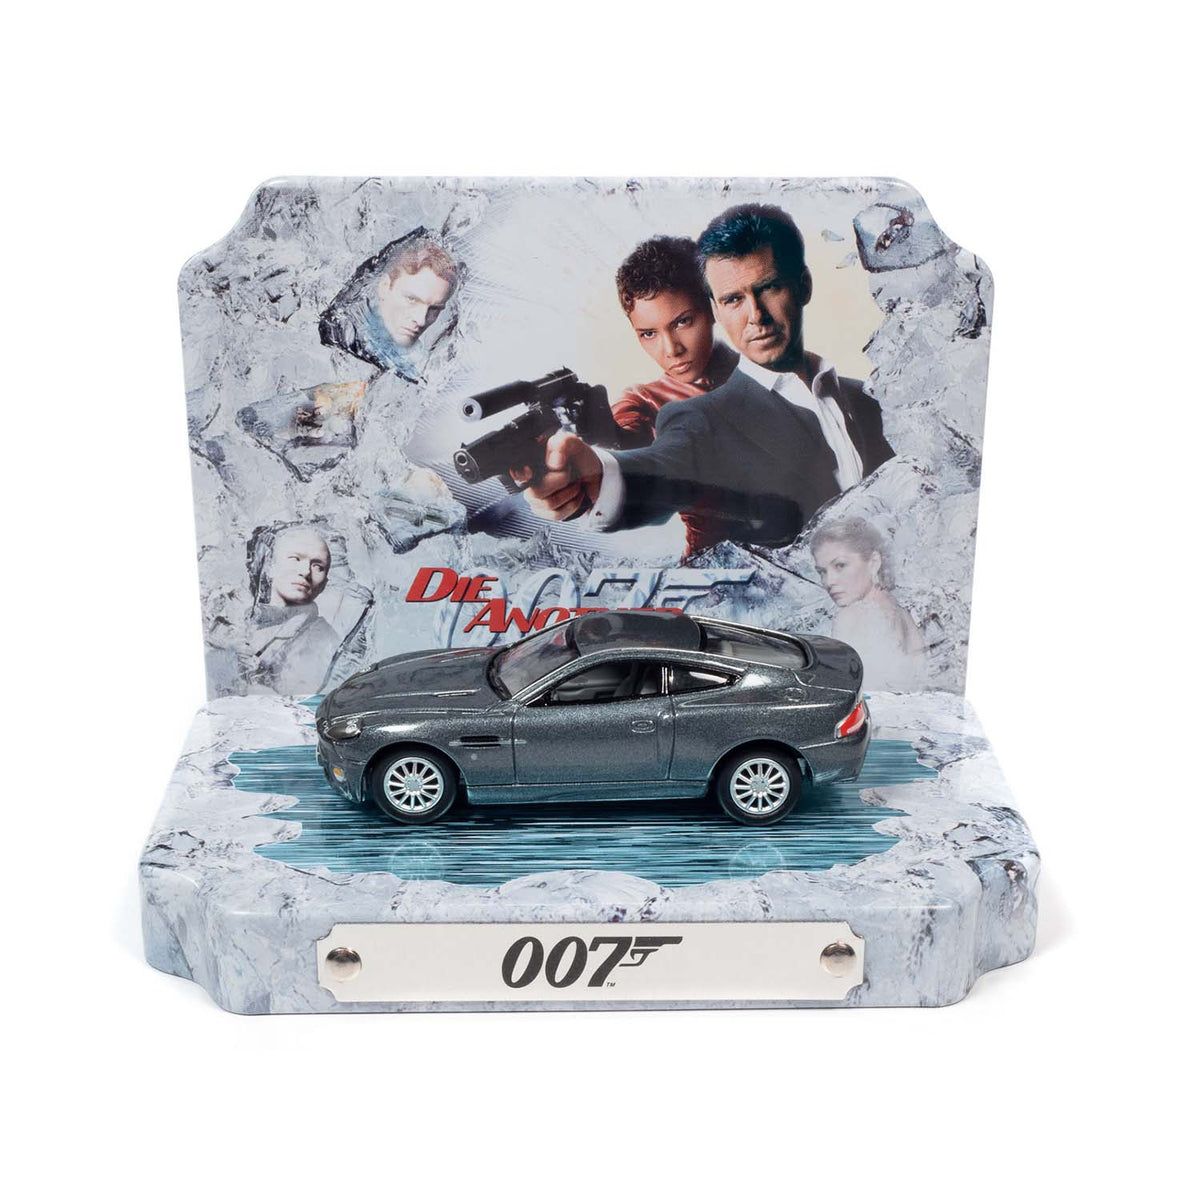 James Bond Mustang &amp; Vanquish Two Car Set - By Johnny Lightning (Pre-order) ROUND2 